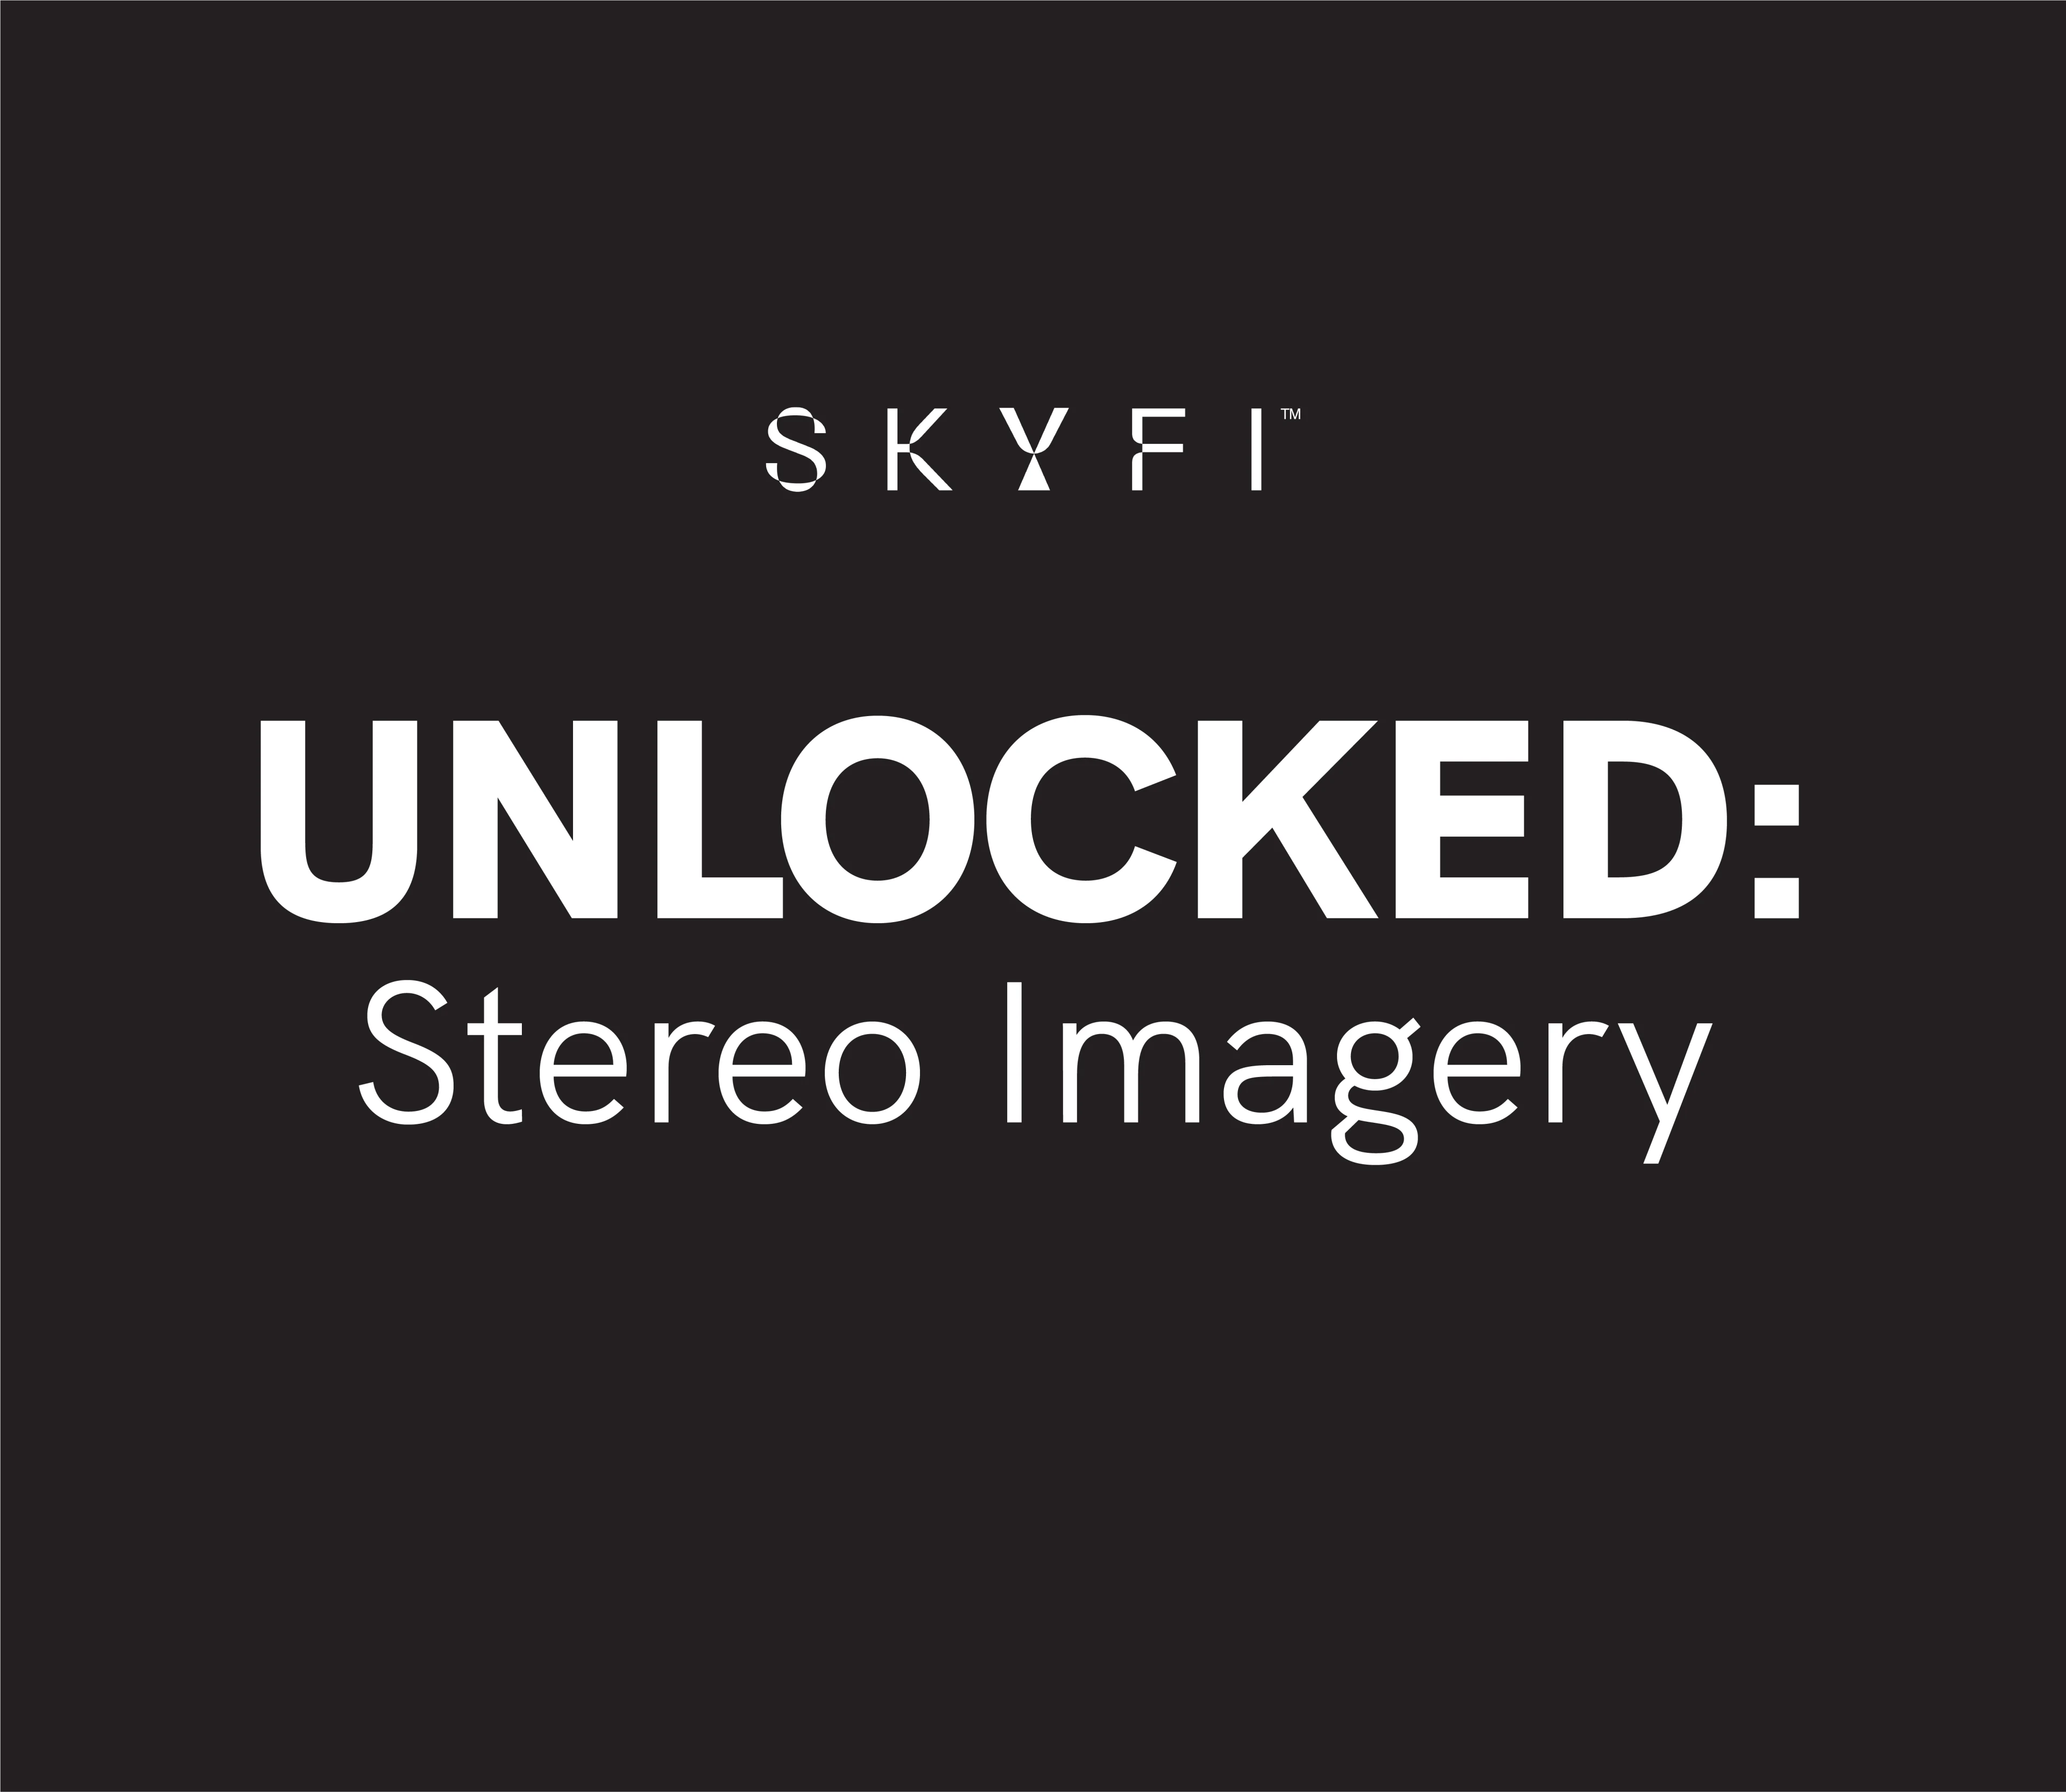 unlocked, stereo imagery